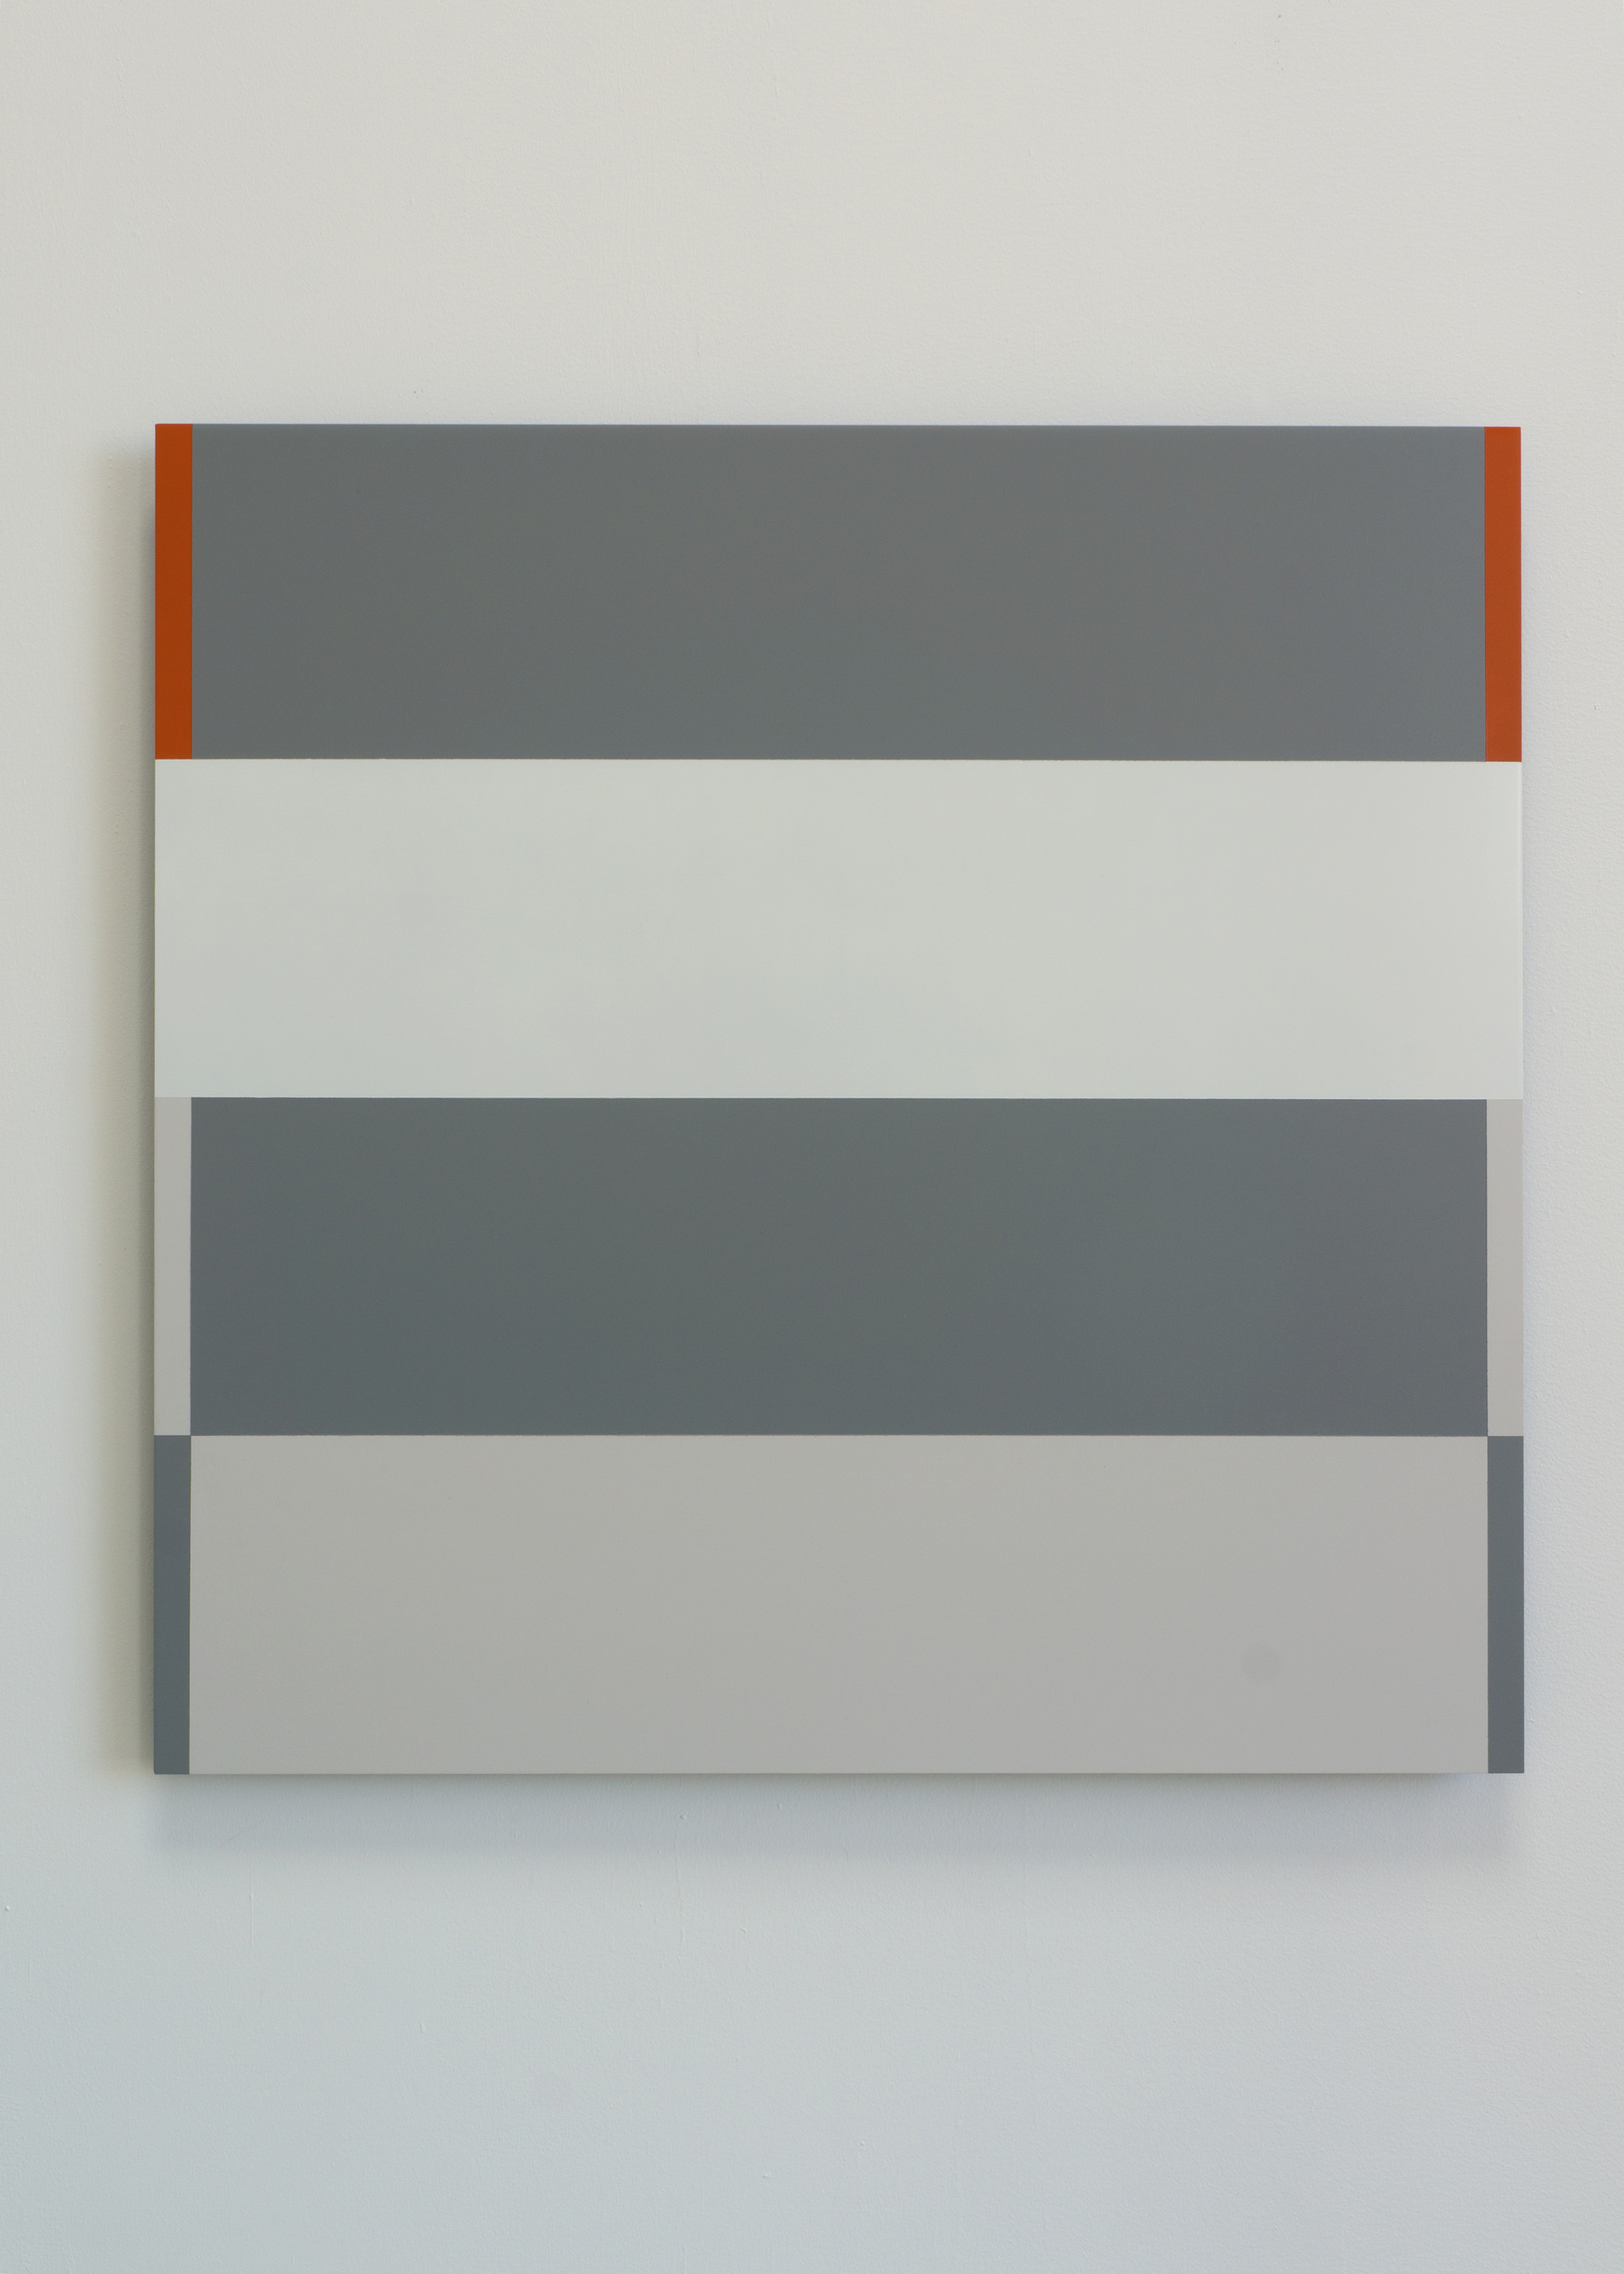  "2 Orange Corners"  2014  28" x 28"  spray paint on aluminum 